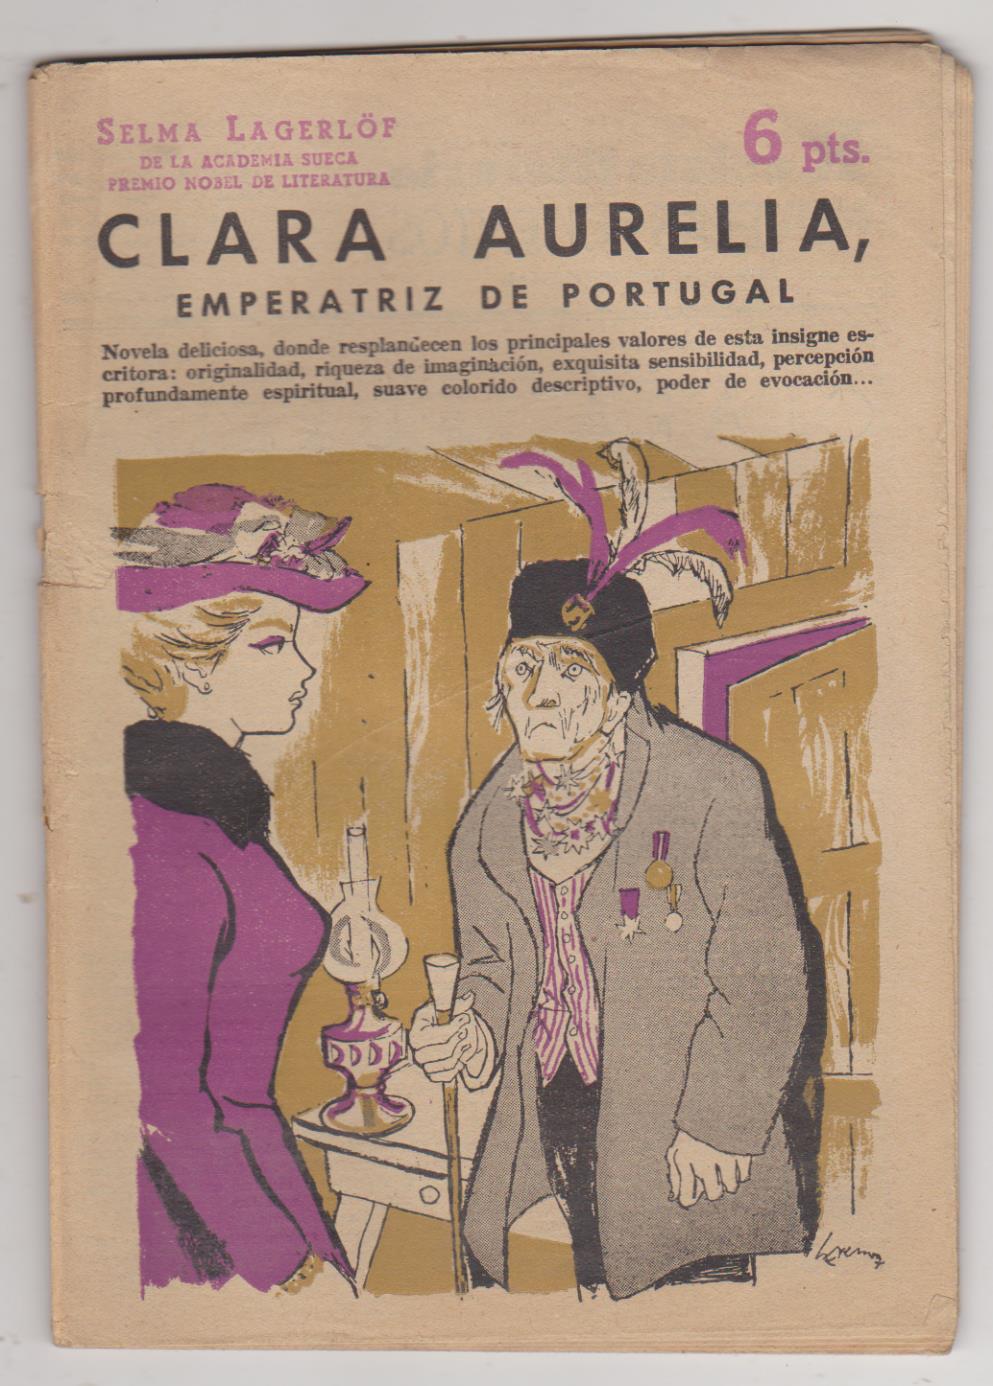 Revista Literaria nº 1494. Selma Lagerlof. Clara Aurelia, Emperatriz de Portugal. Año 1958